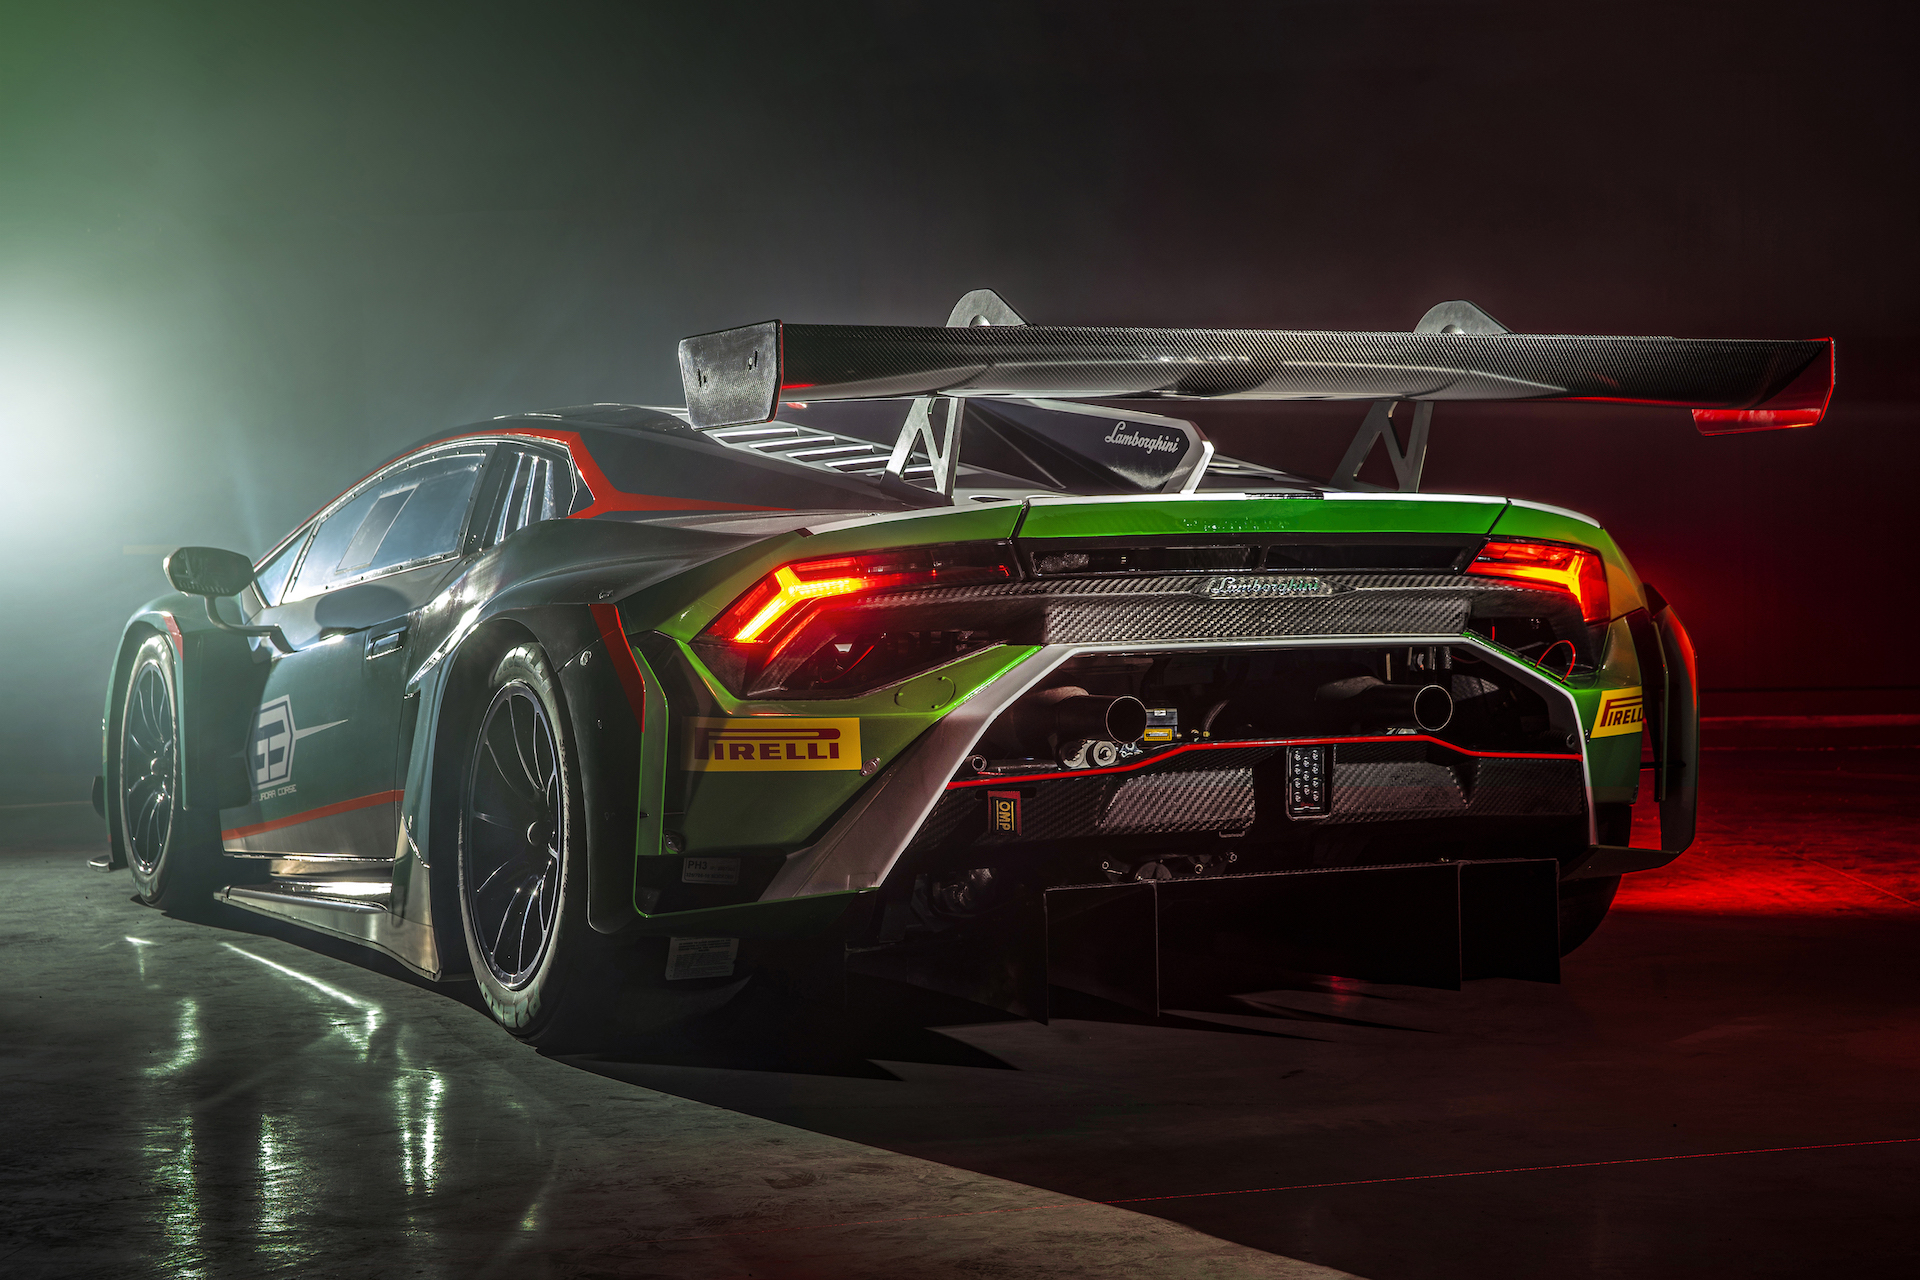 Lamborghini показала новый гоночный спорткар Huracan GT3 Evo2